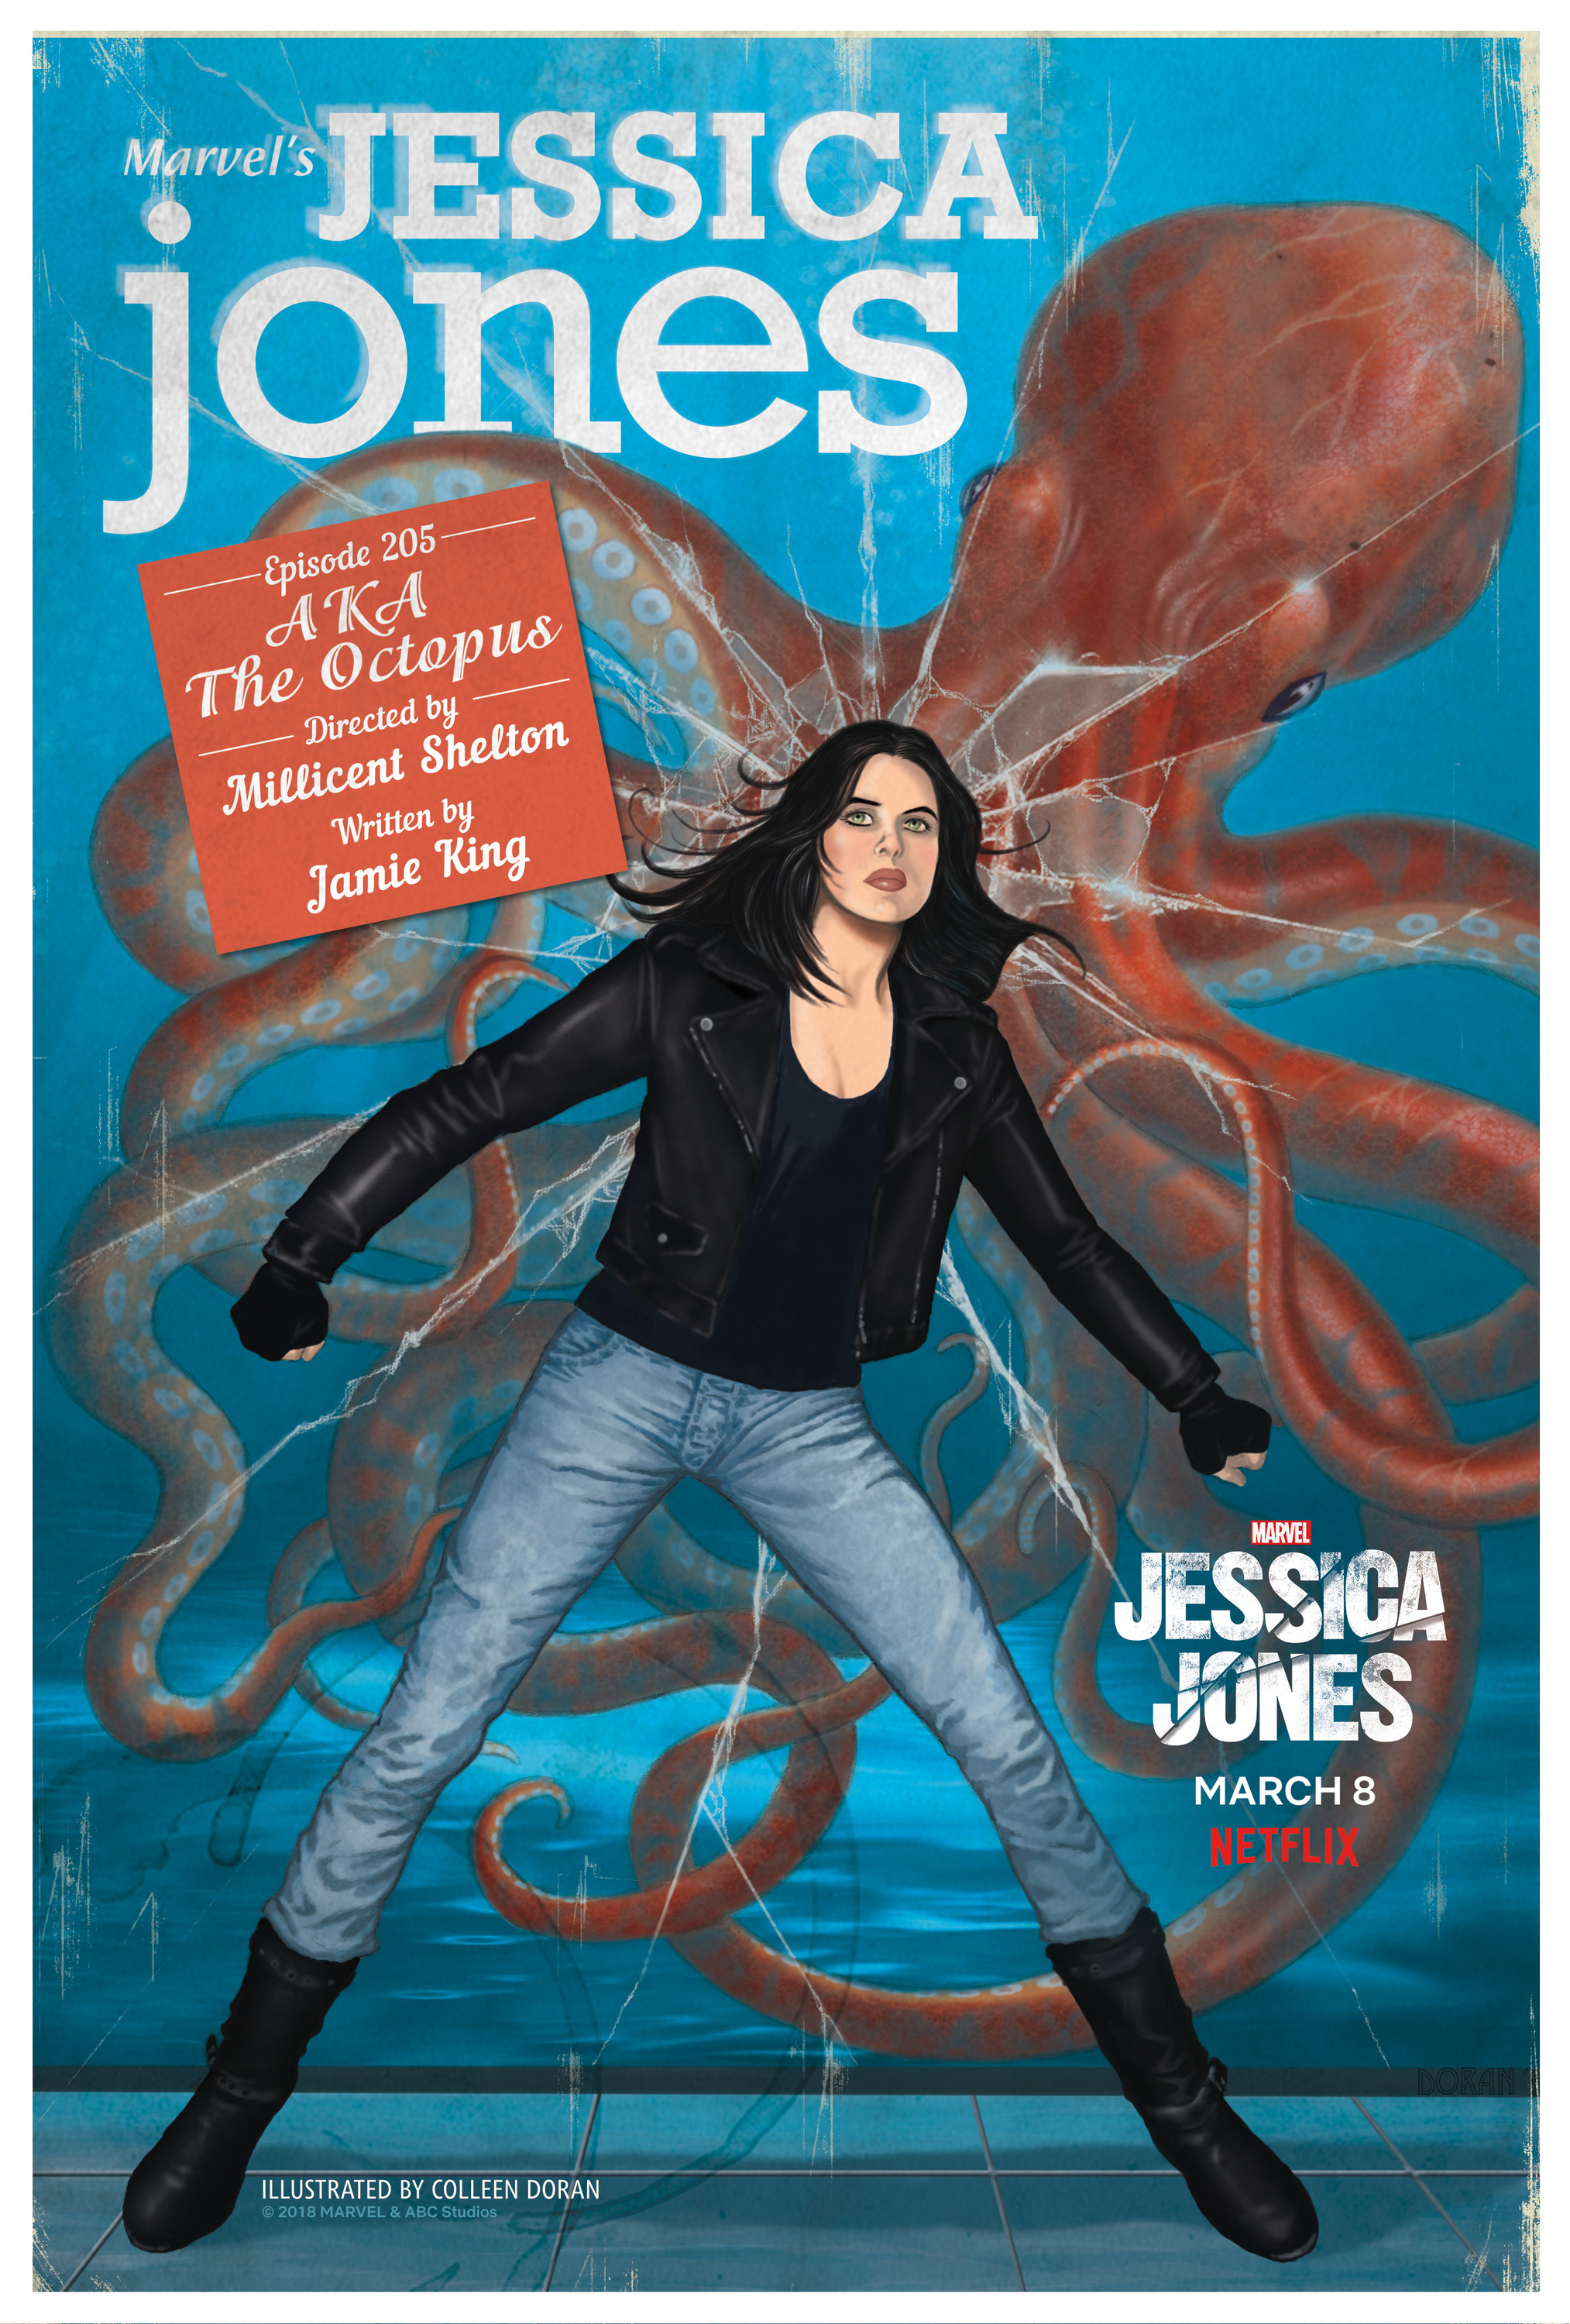 Mega Sized TV Poster Image for Jessica Jones (#11 of 21)